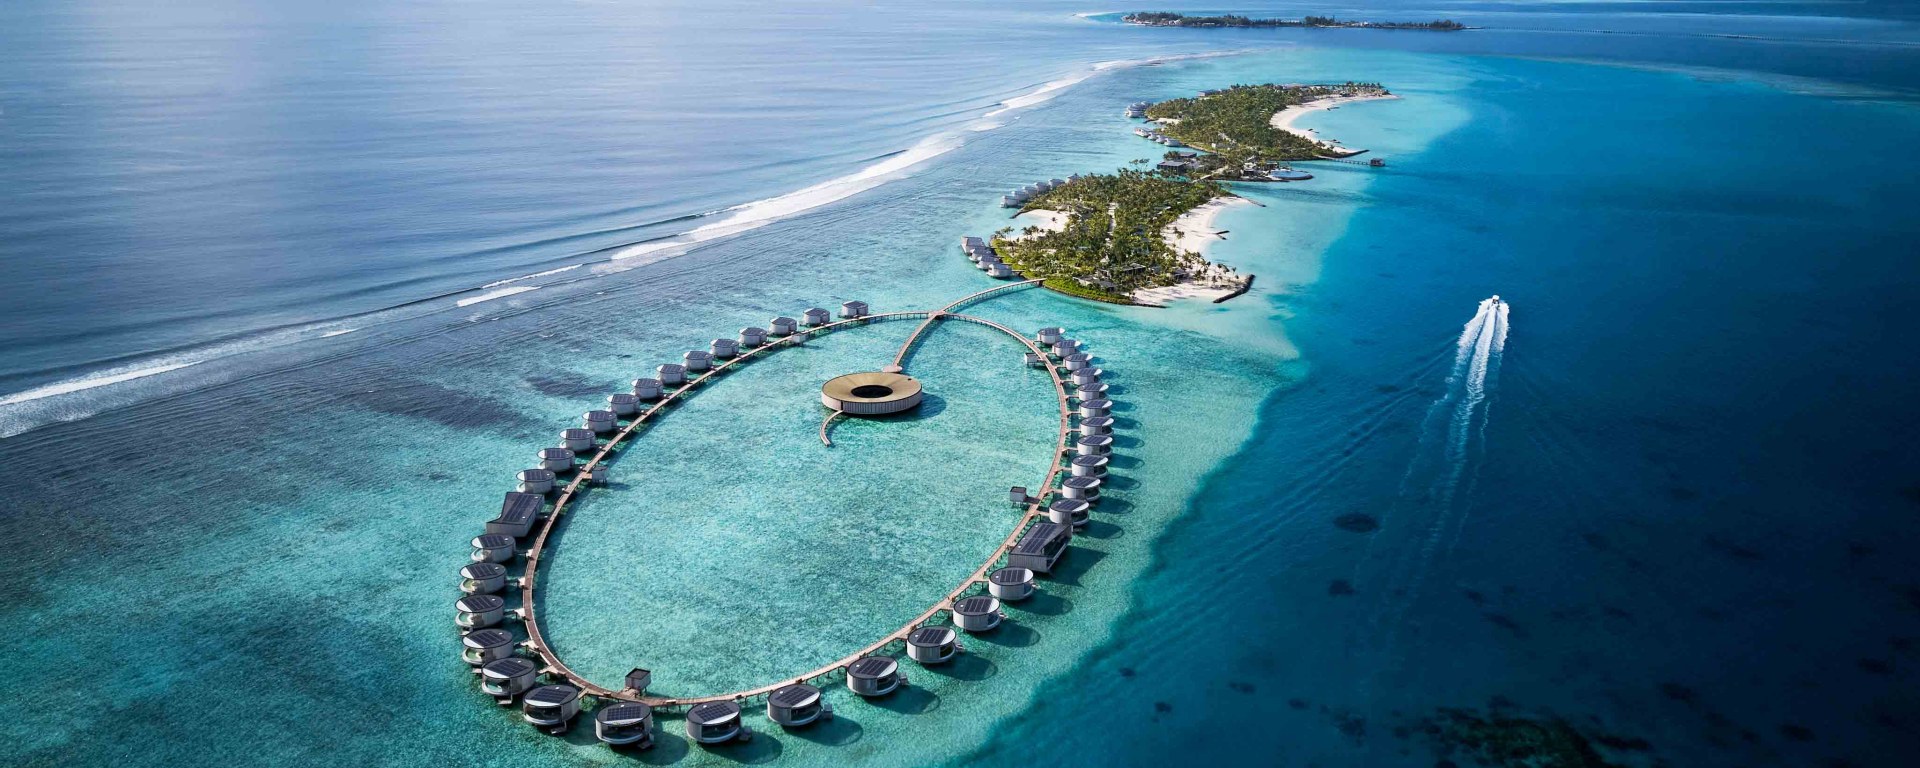 neues Luxusresort Malediven - The Ritz Carlton Maldives Fari Islands